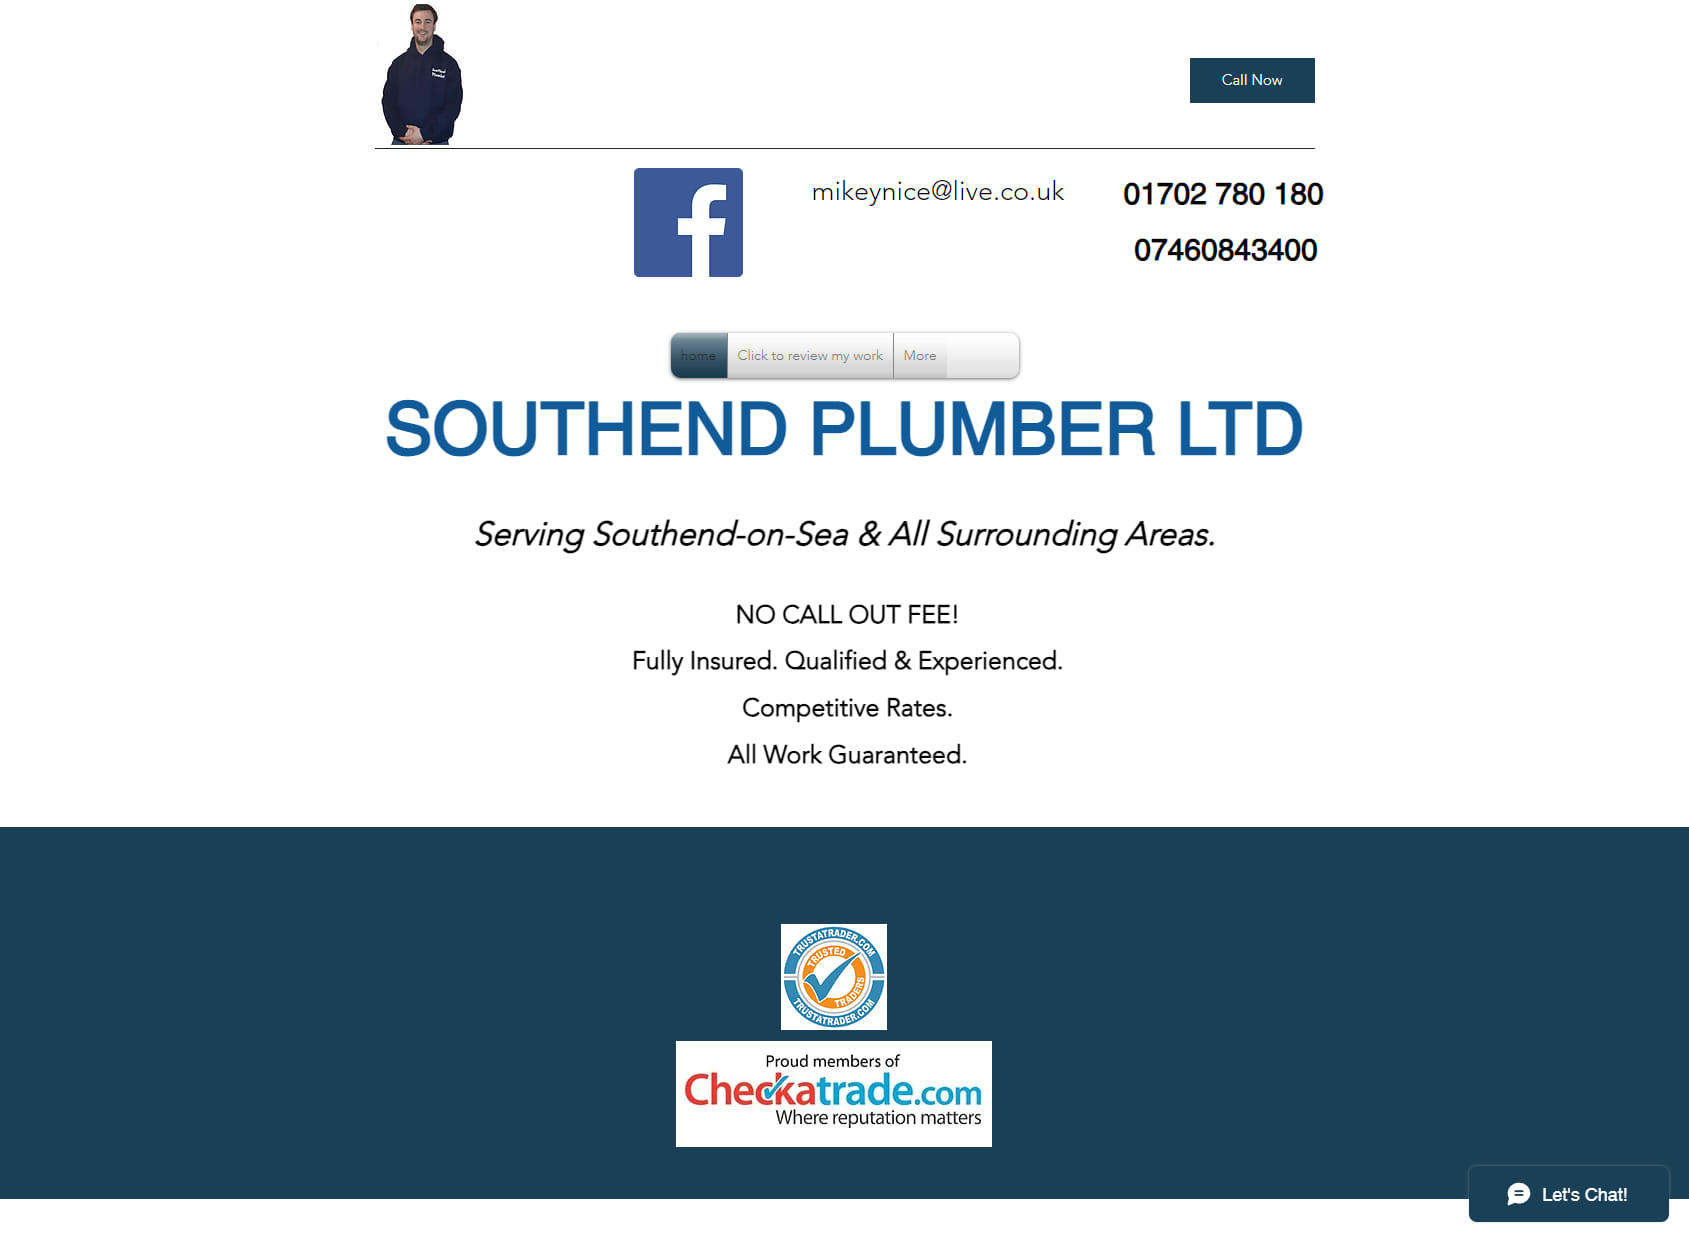 Southend Plumber Ltd